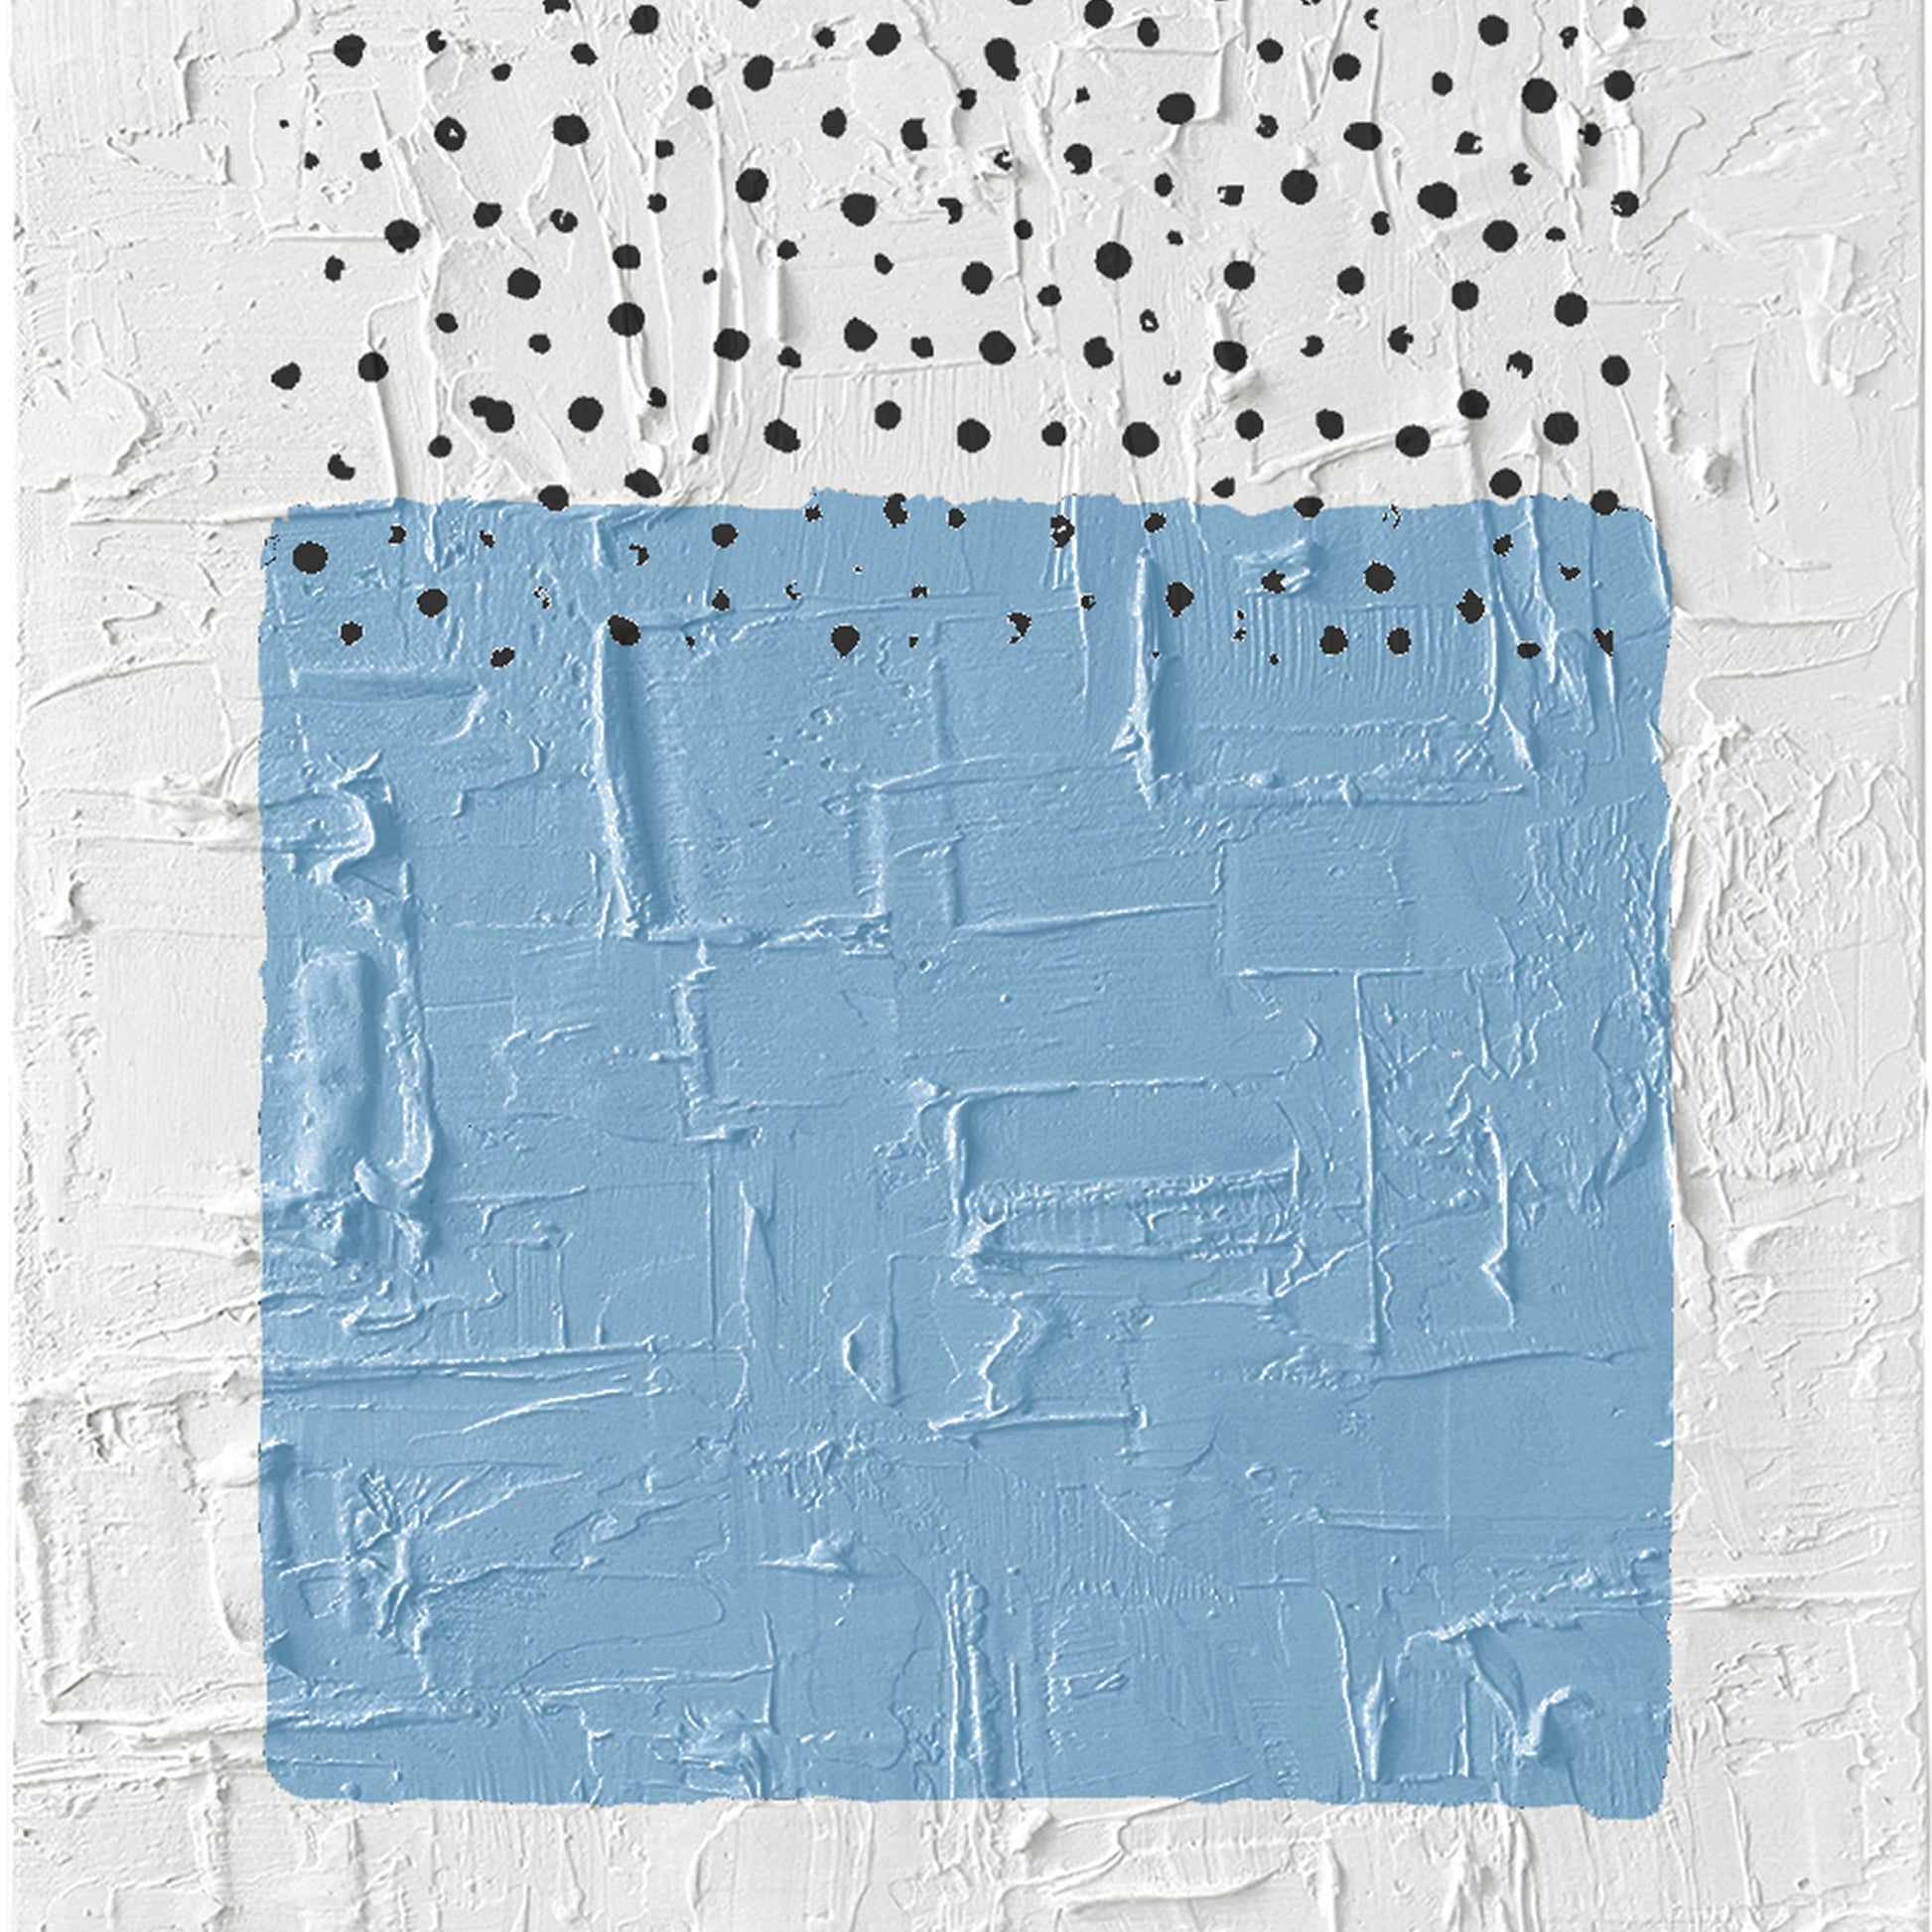 Abstract Black Dots + Blue Textured Art TEXTURED ART LULUSIMONSTUDIO 